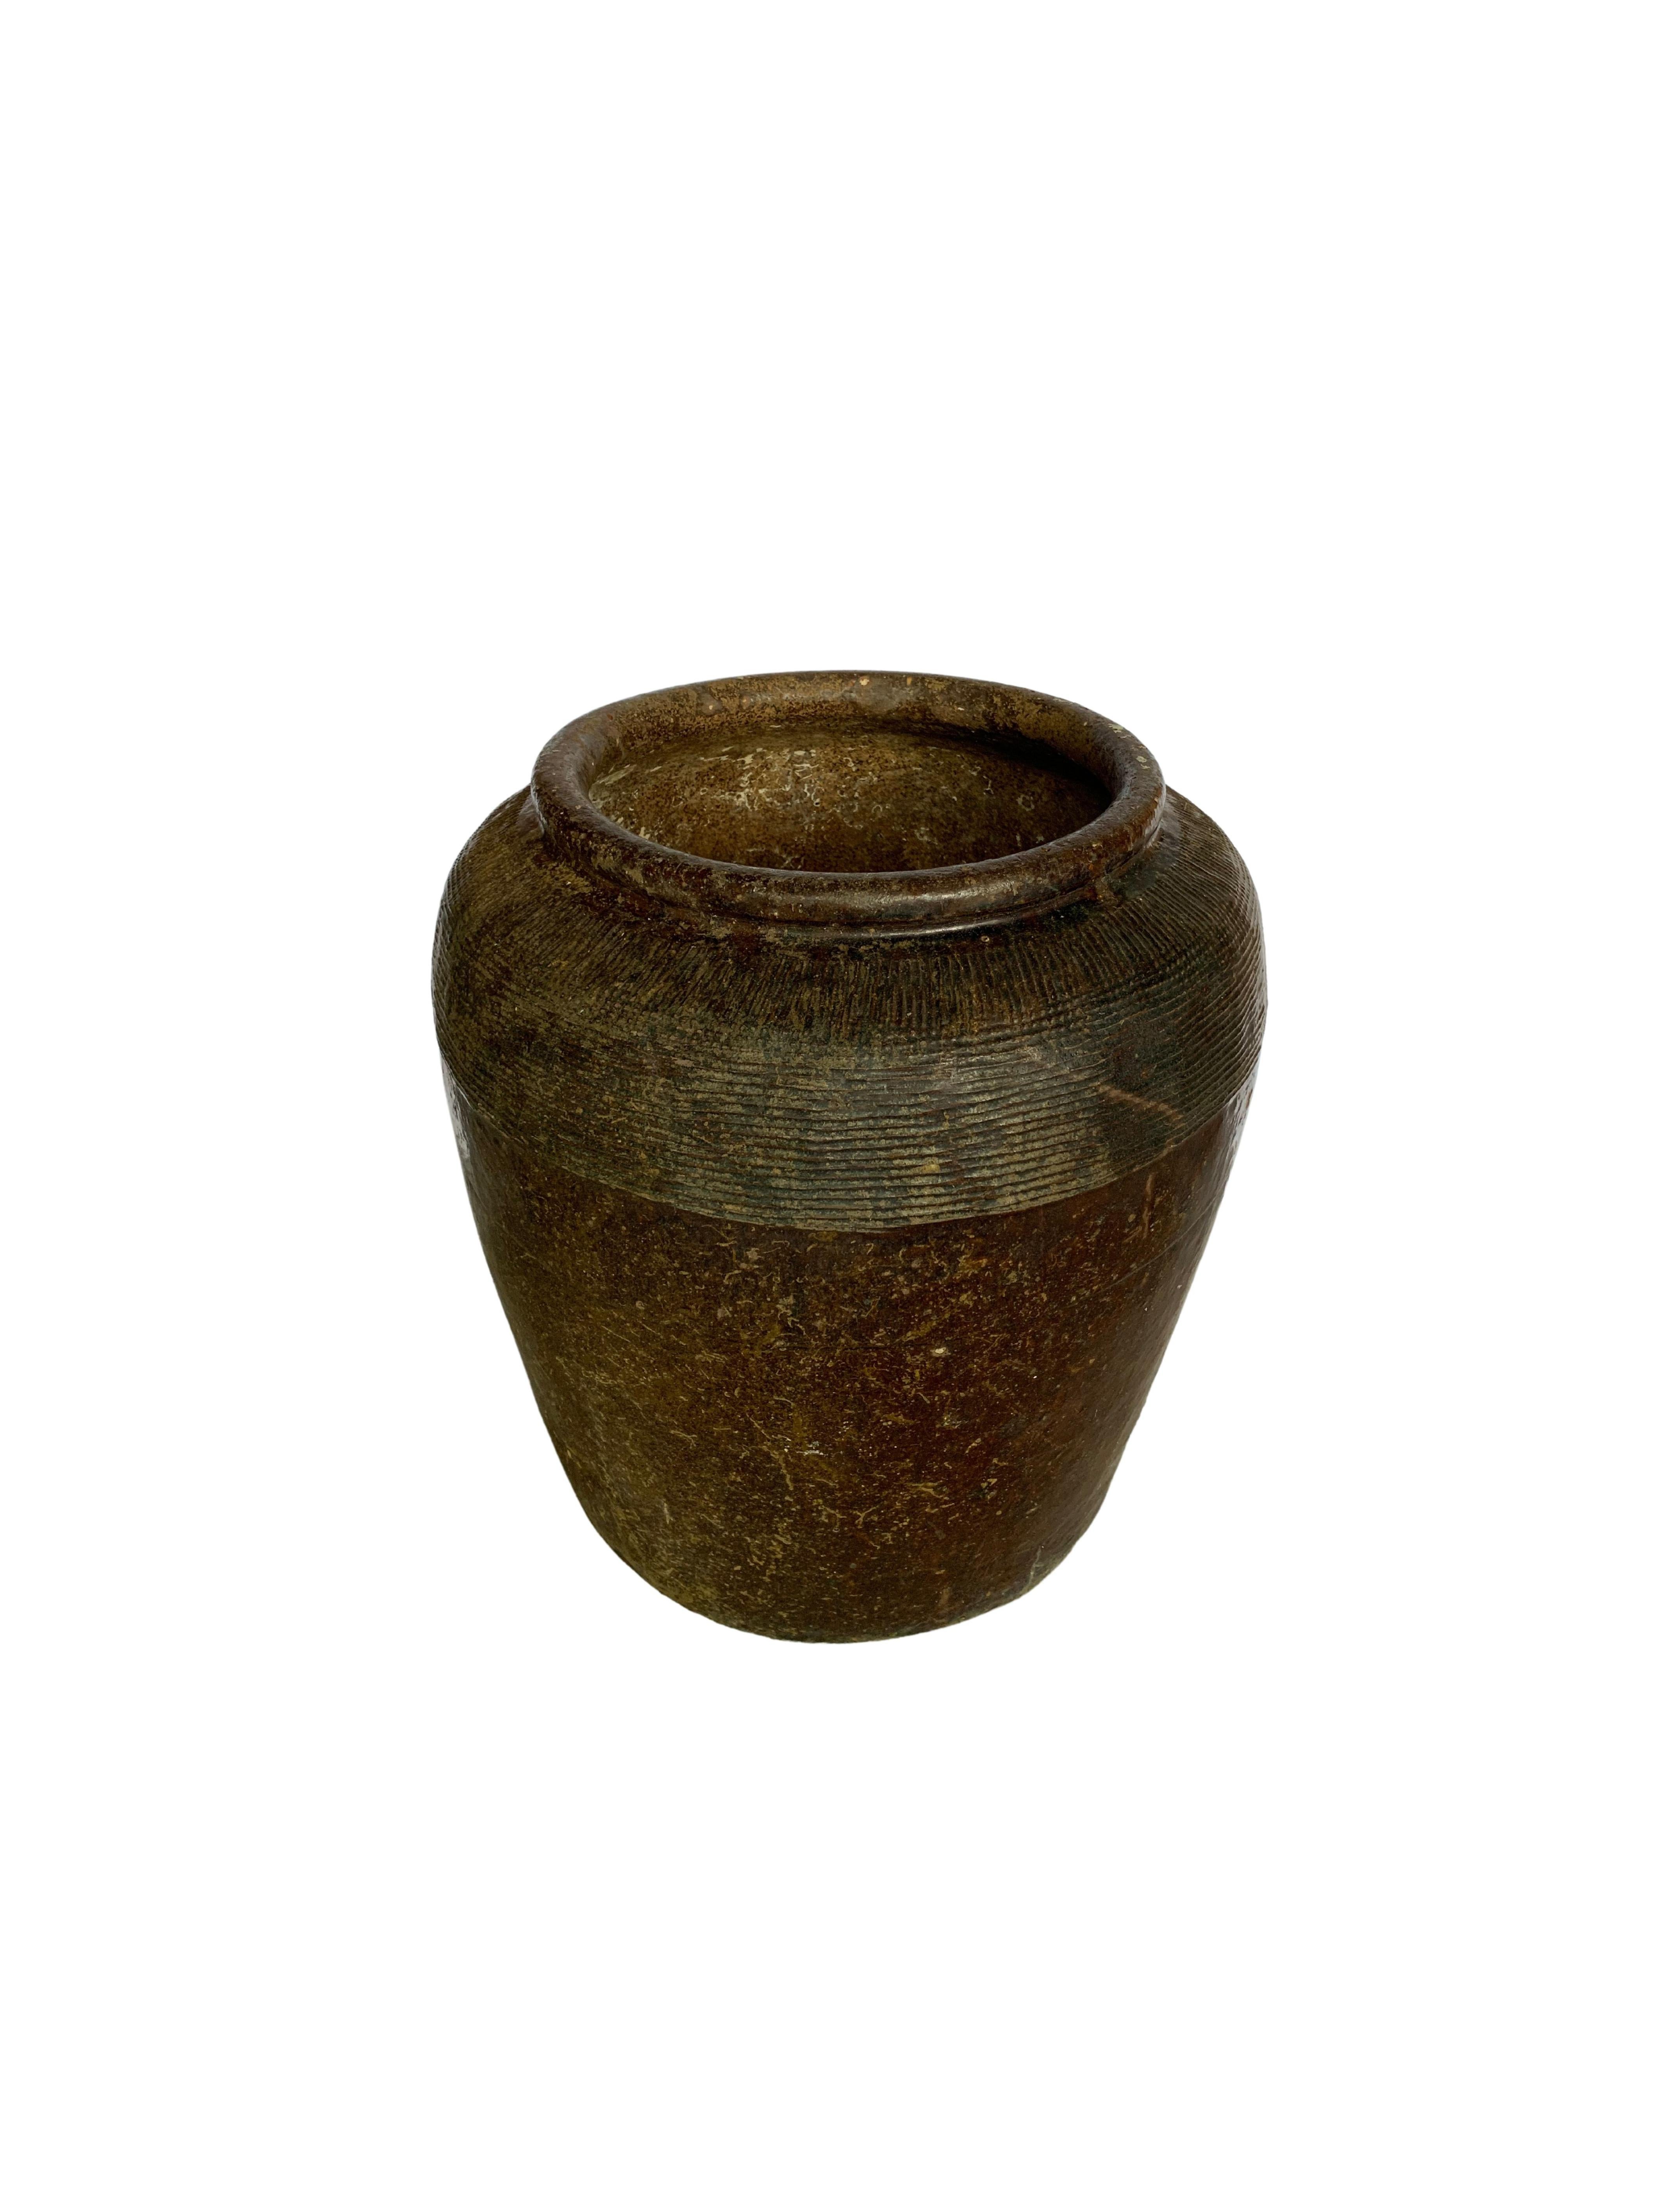 Antique Chinese Brown Glazed Ceramic Salty Egg Jar, c. 1900 For Sale 1